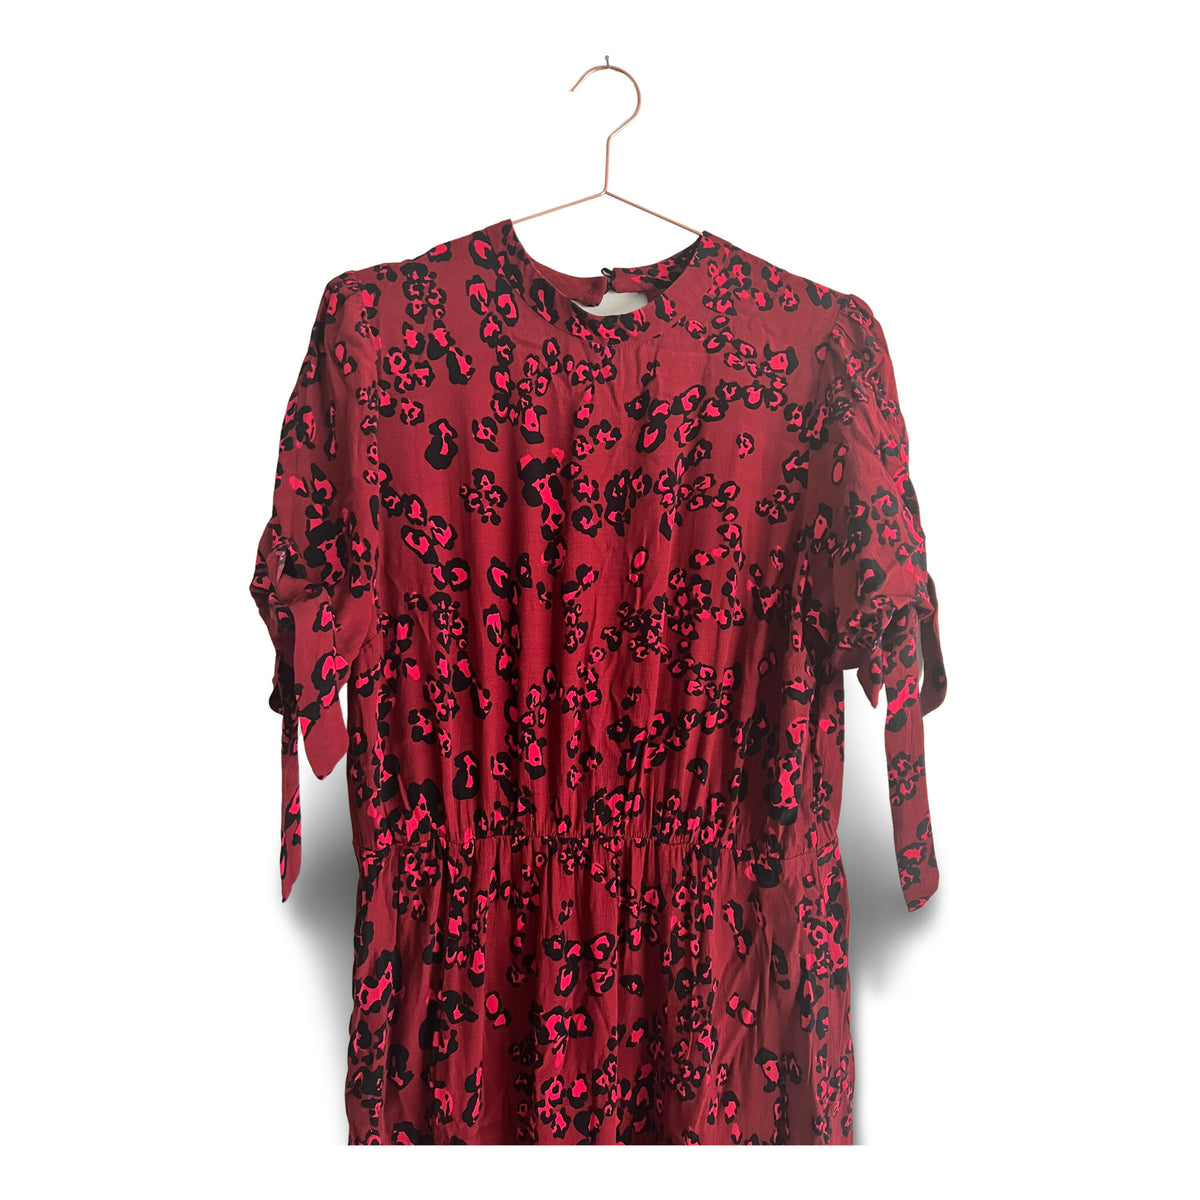 Boden Leopard Dress in Red Preloved